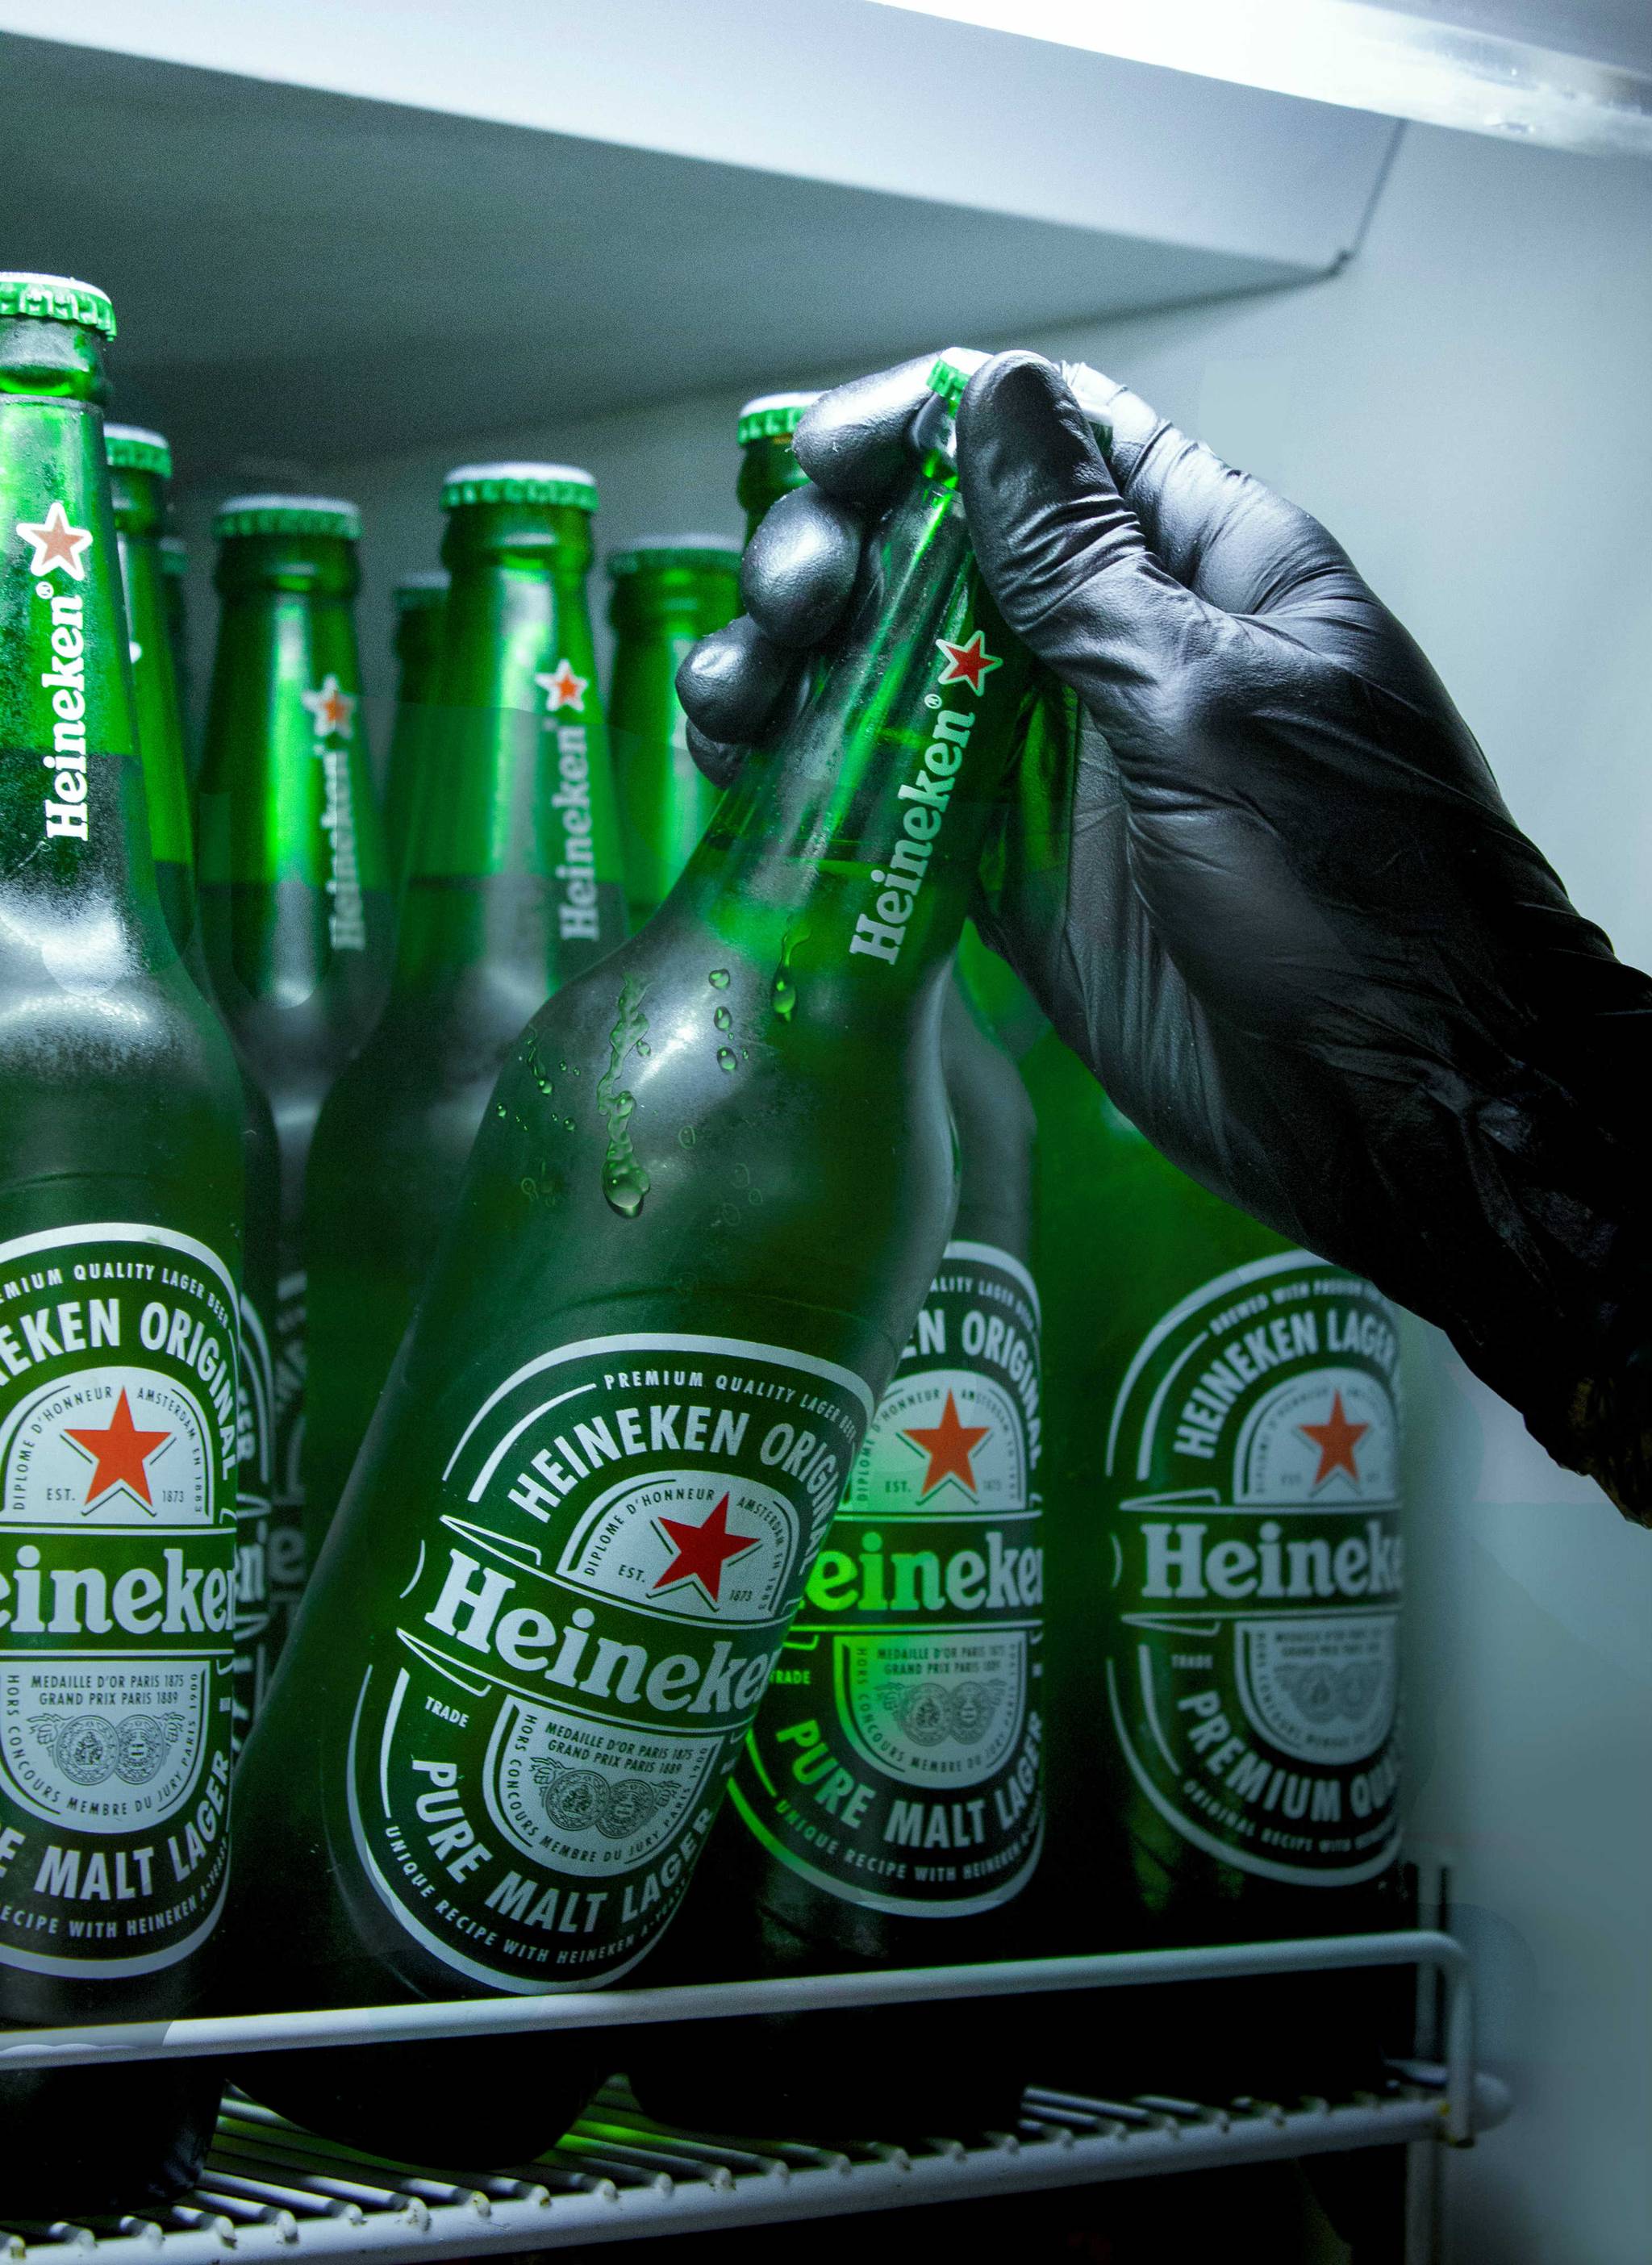 Heineken's 'Holiday Hacks' inspire festive creativity